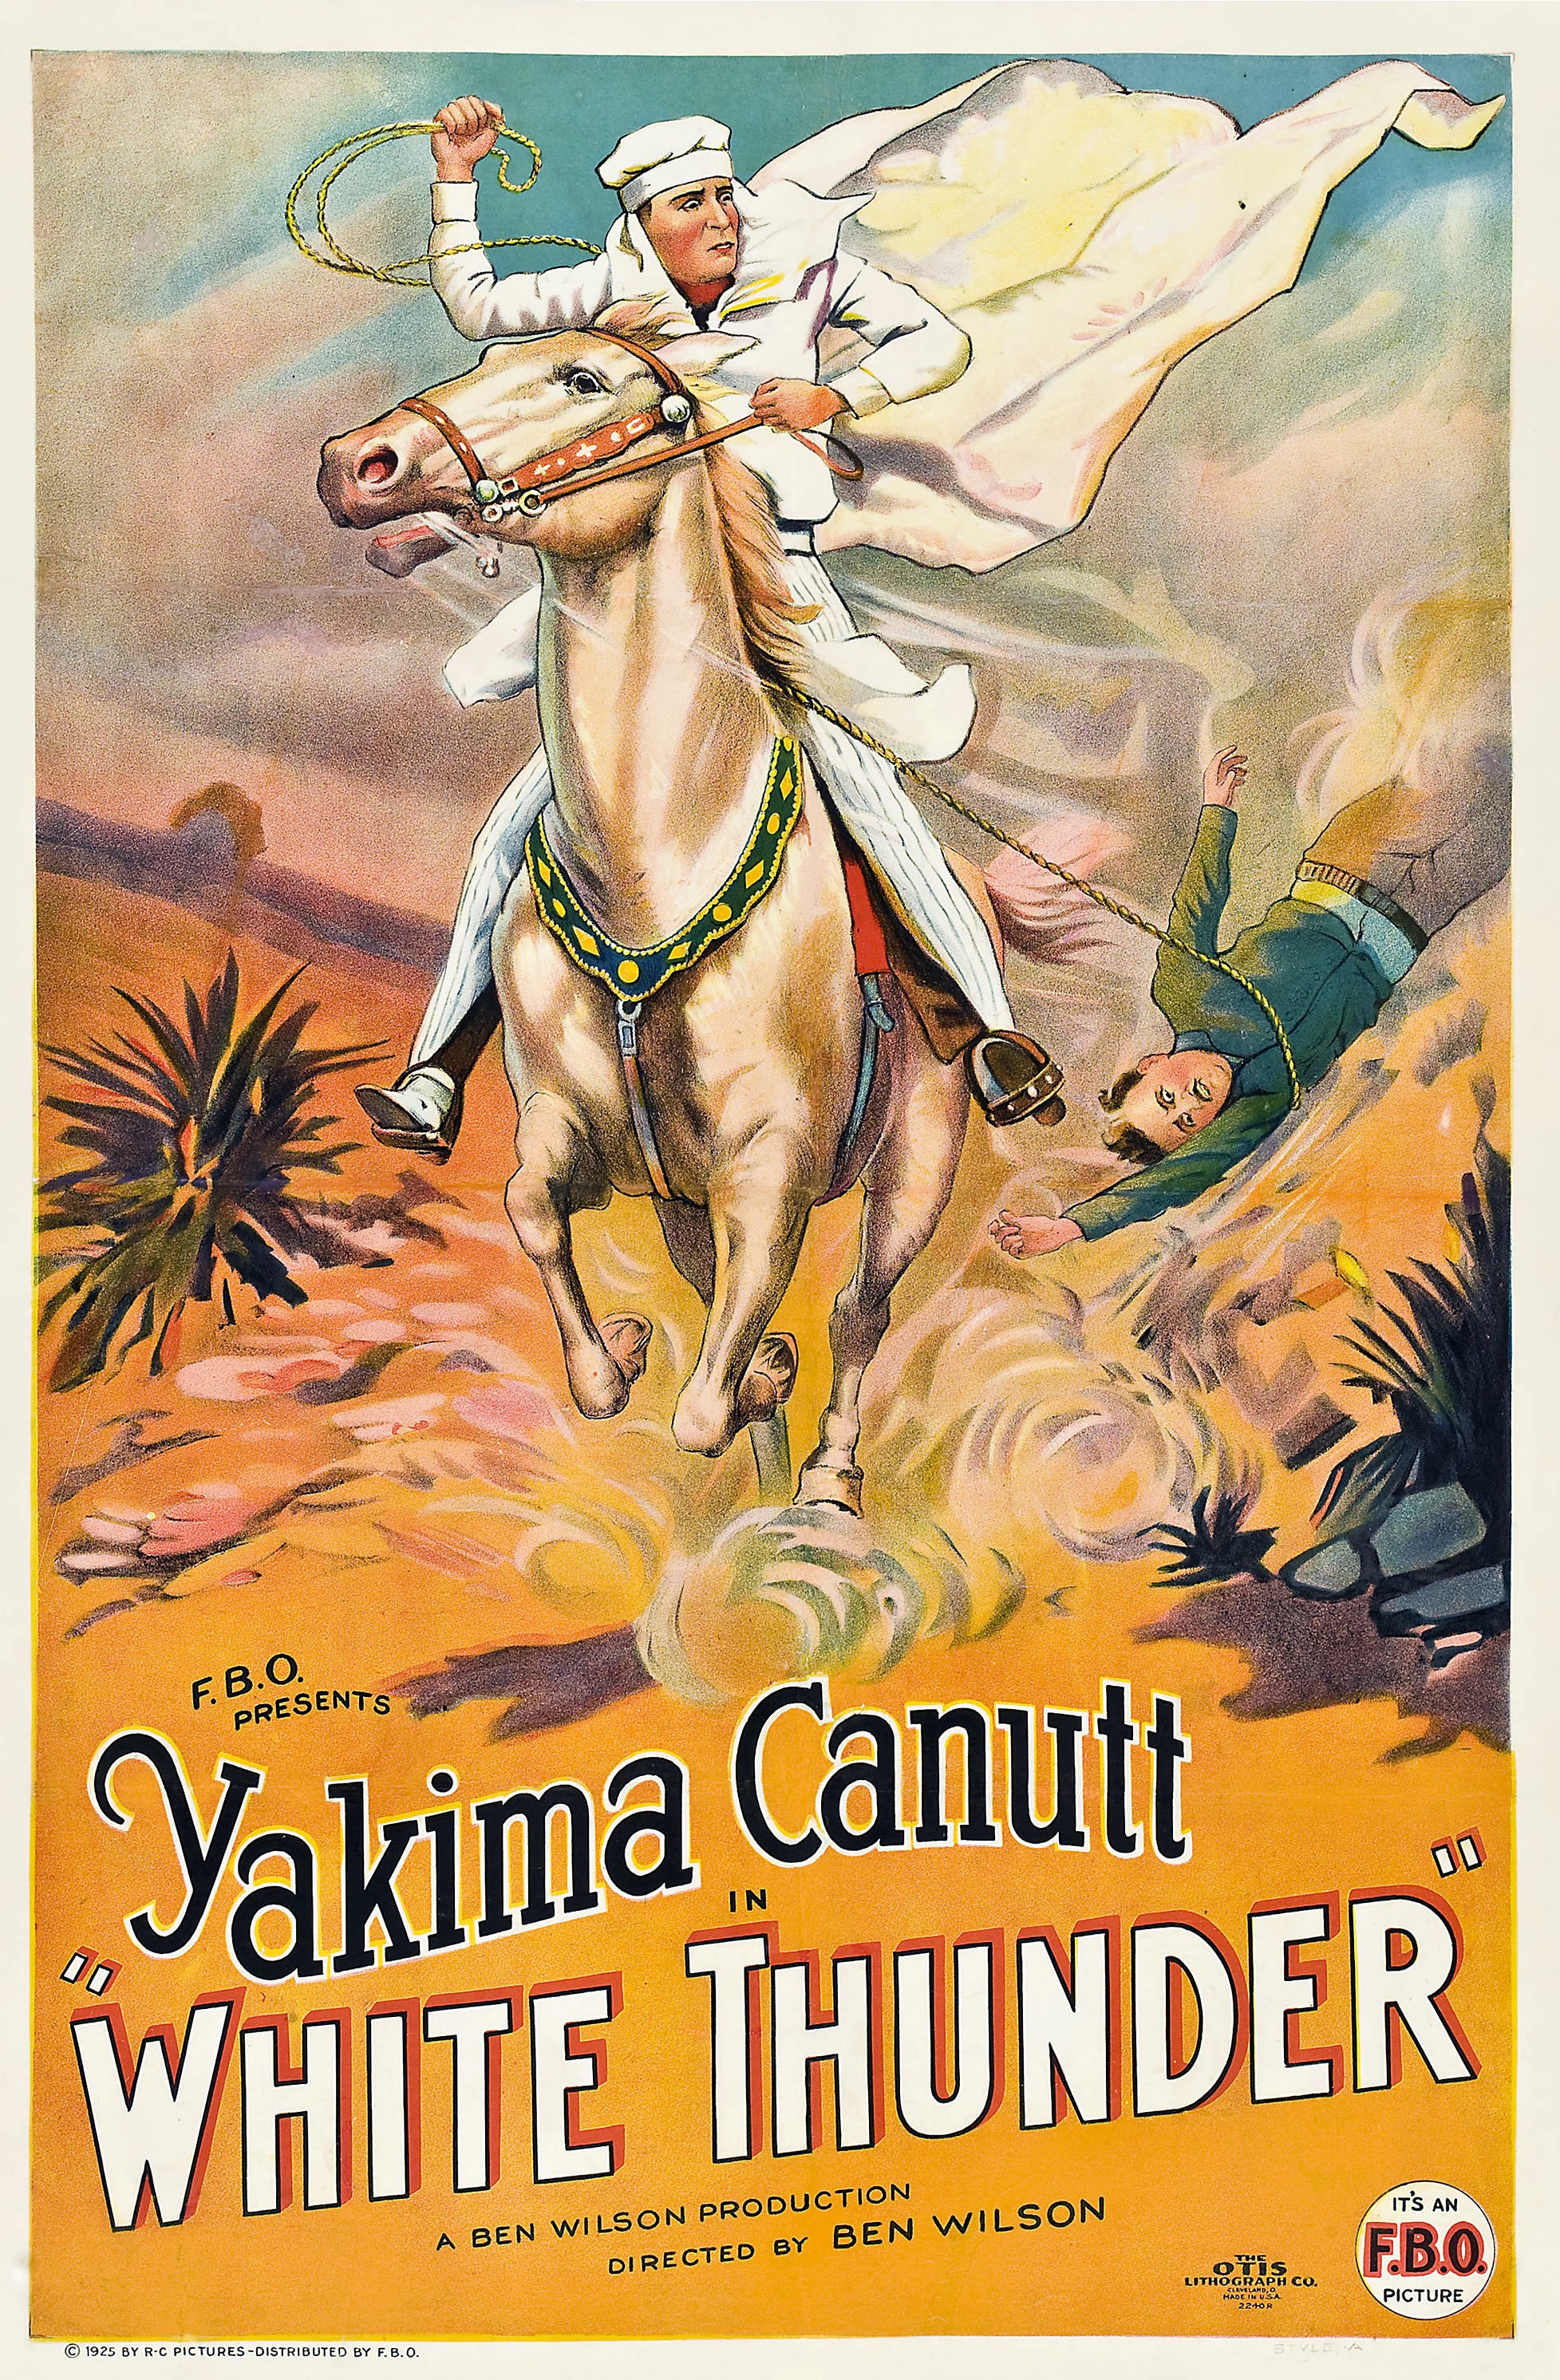 Yakima Canutt 1895-1986 Aged 90 Married Minnie Audrea Rice Yrs. 55 on